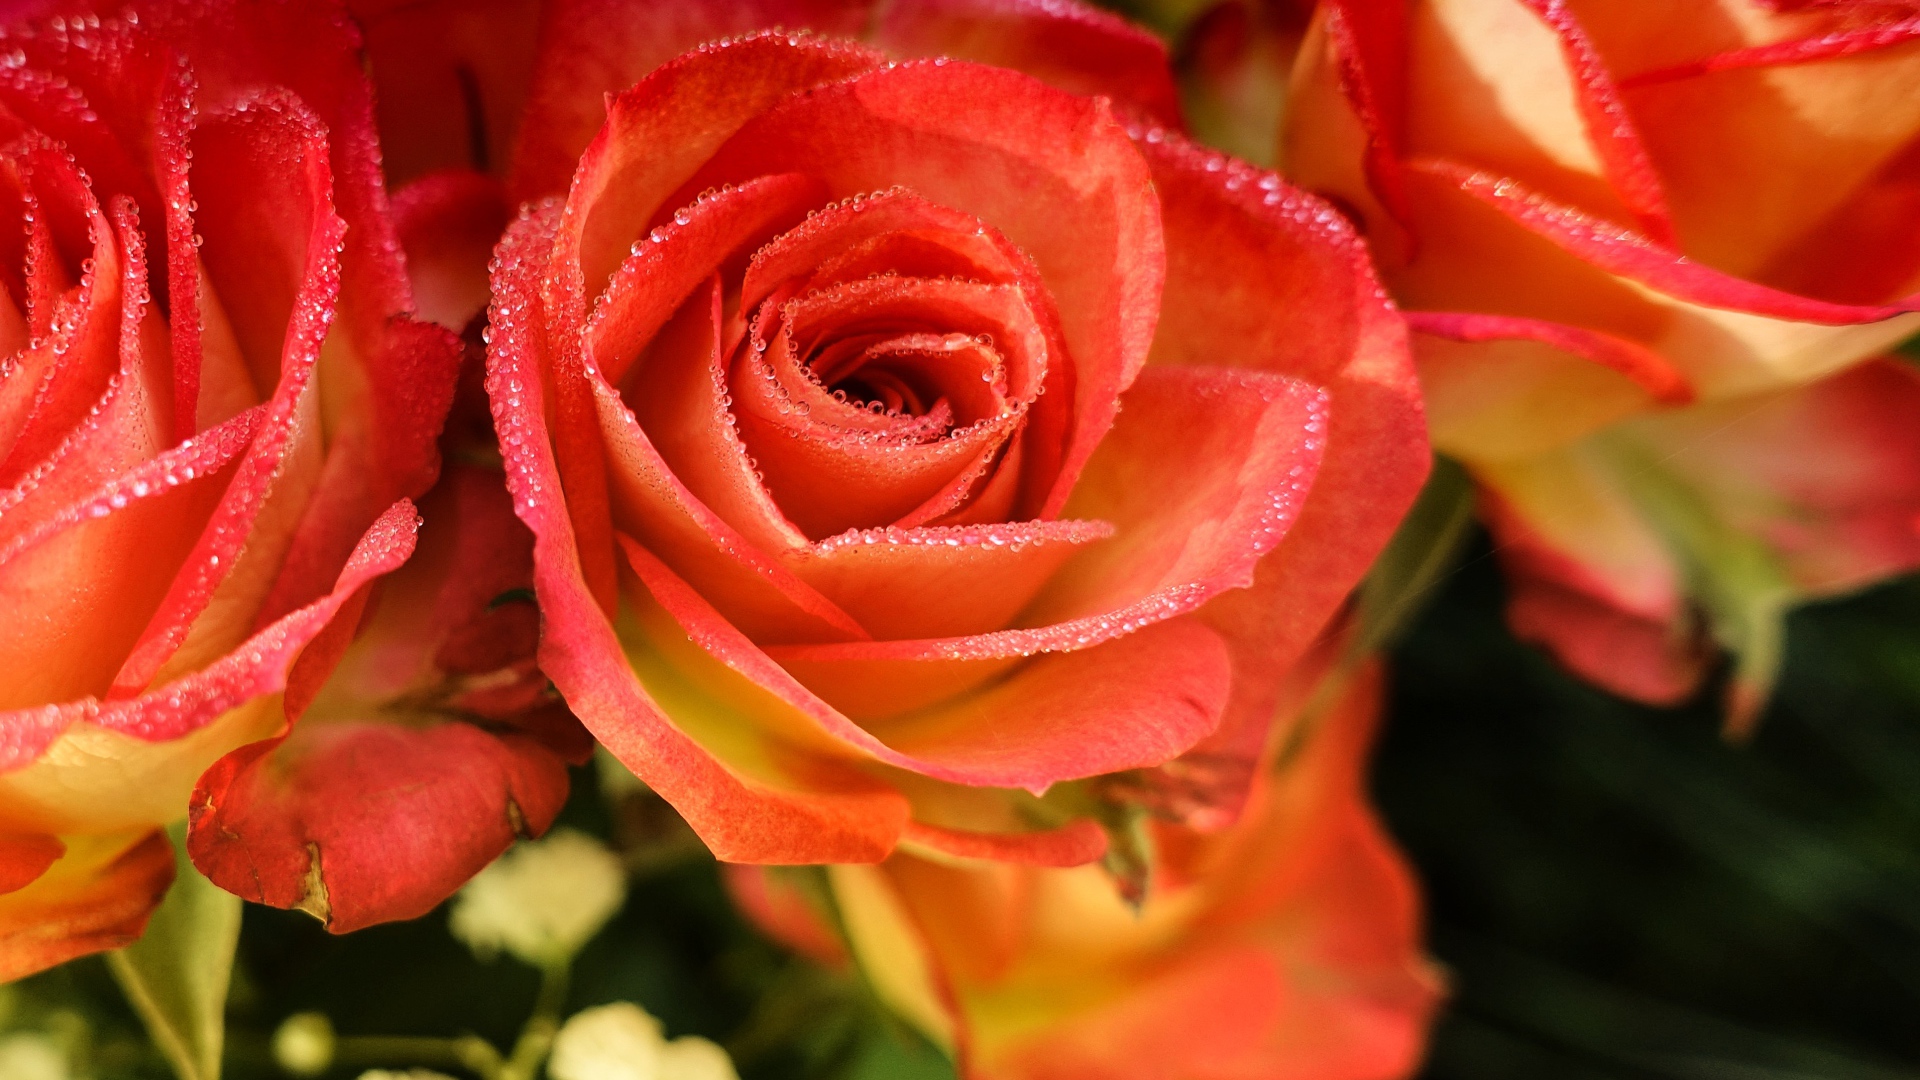 Orange roses with dew on petals close-up